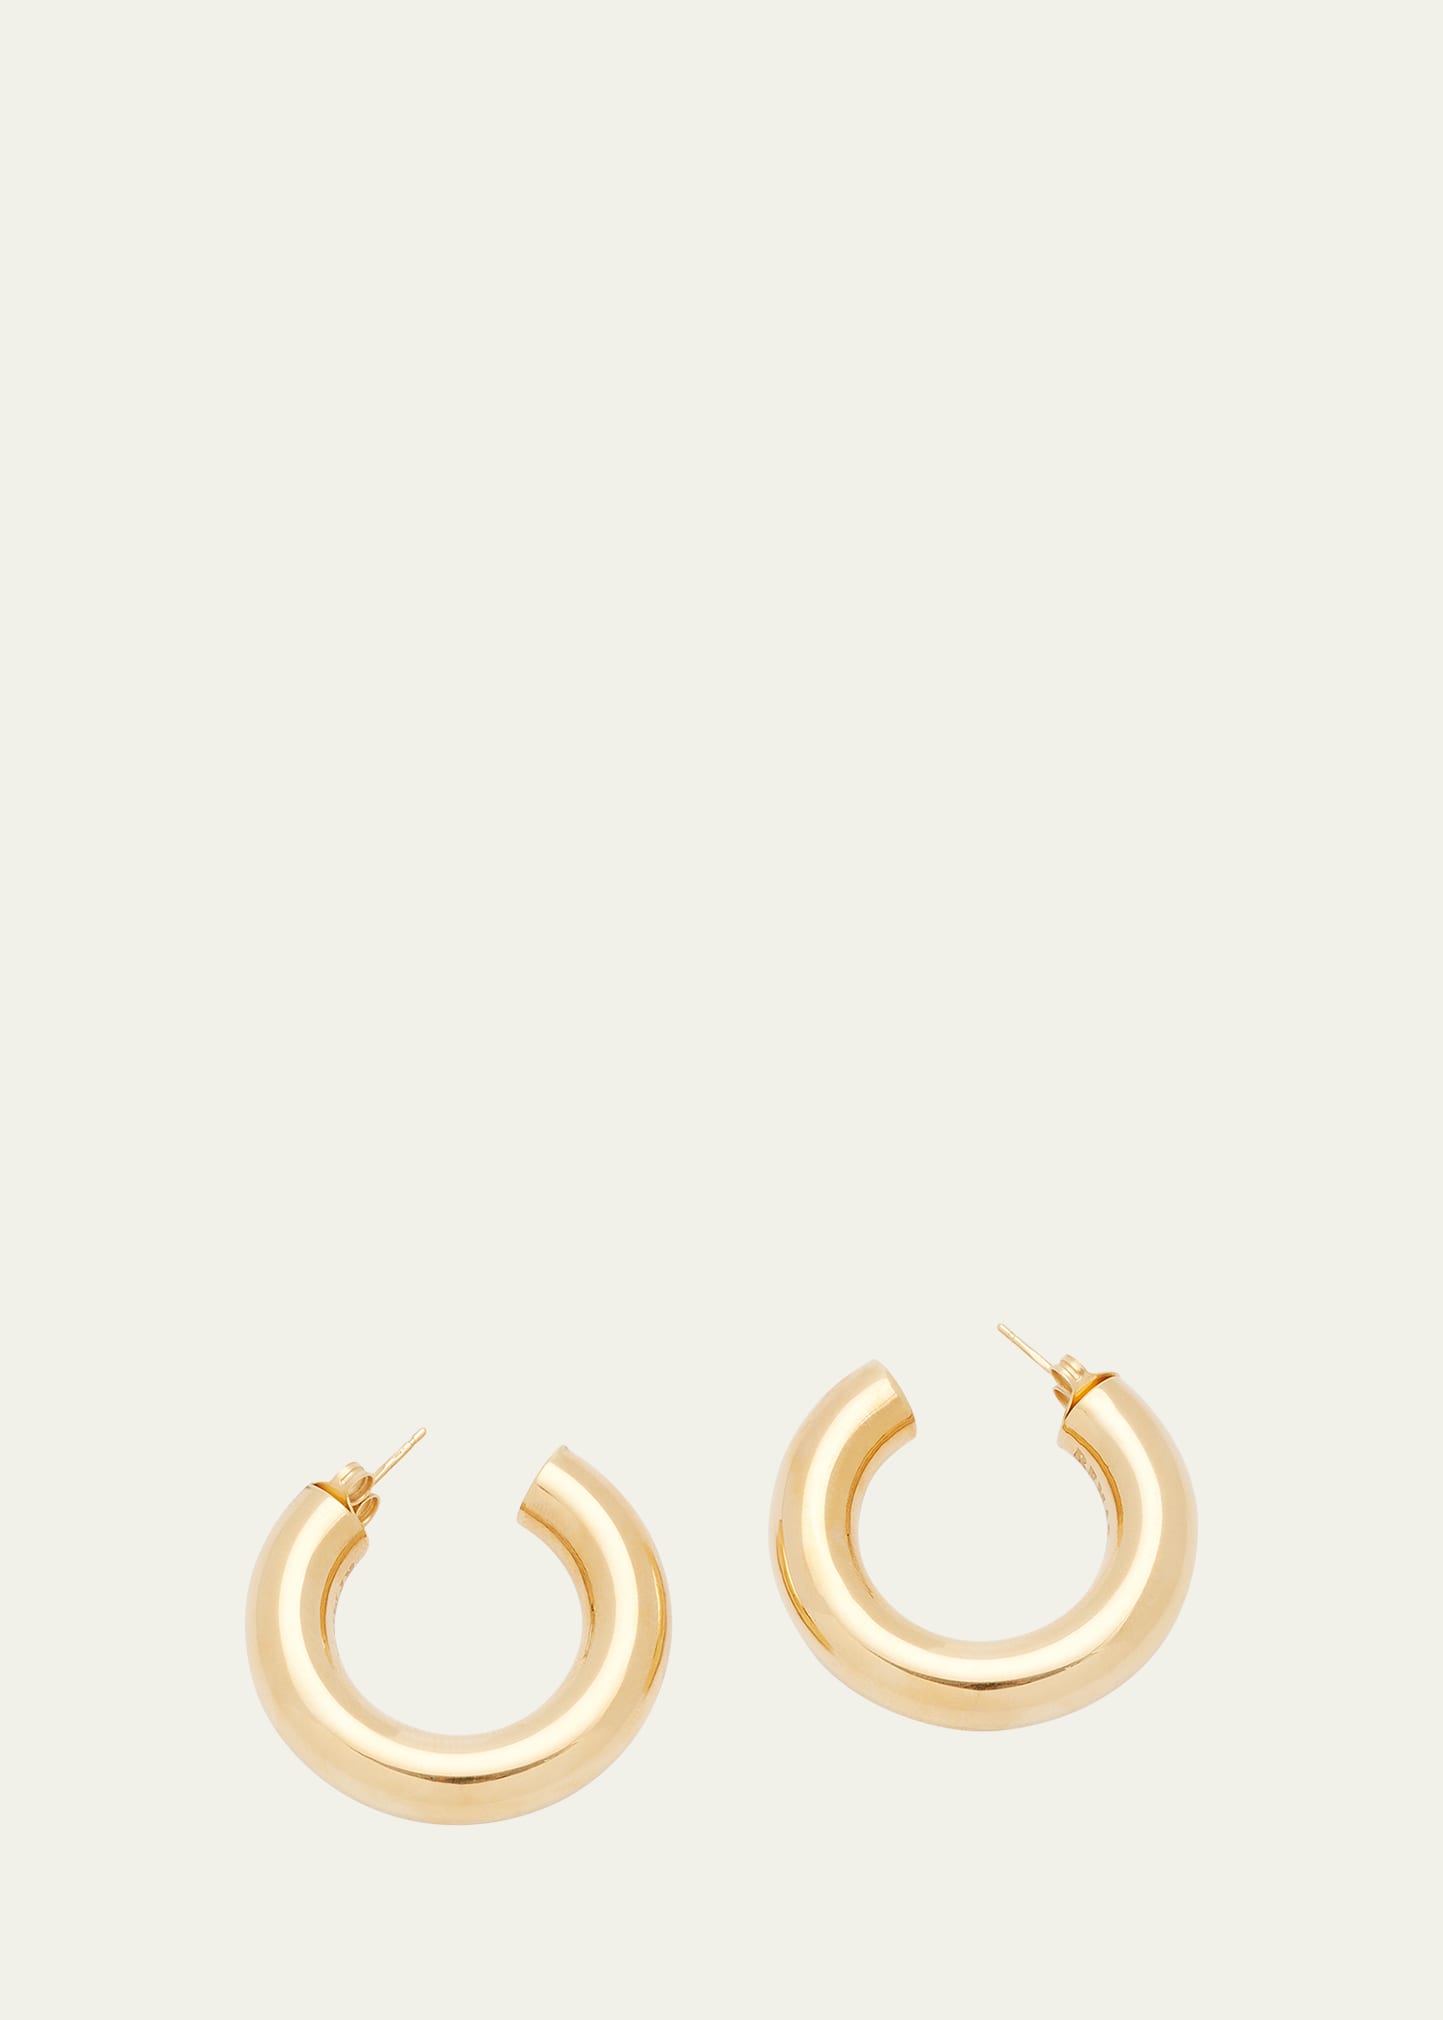 Faraone Mennella 18K Gold Extra Small Barbarella Hoop Earrings